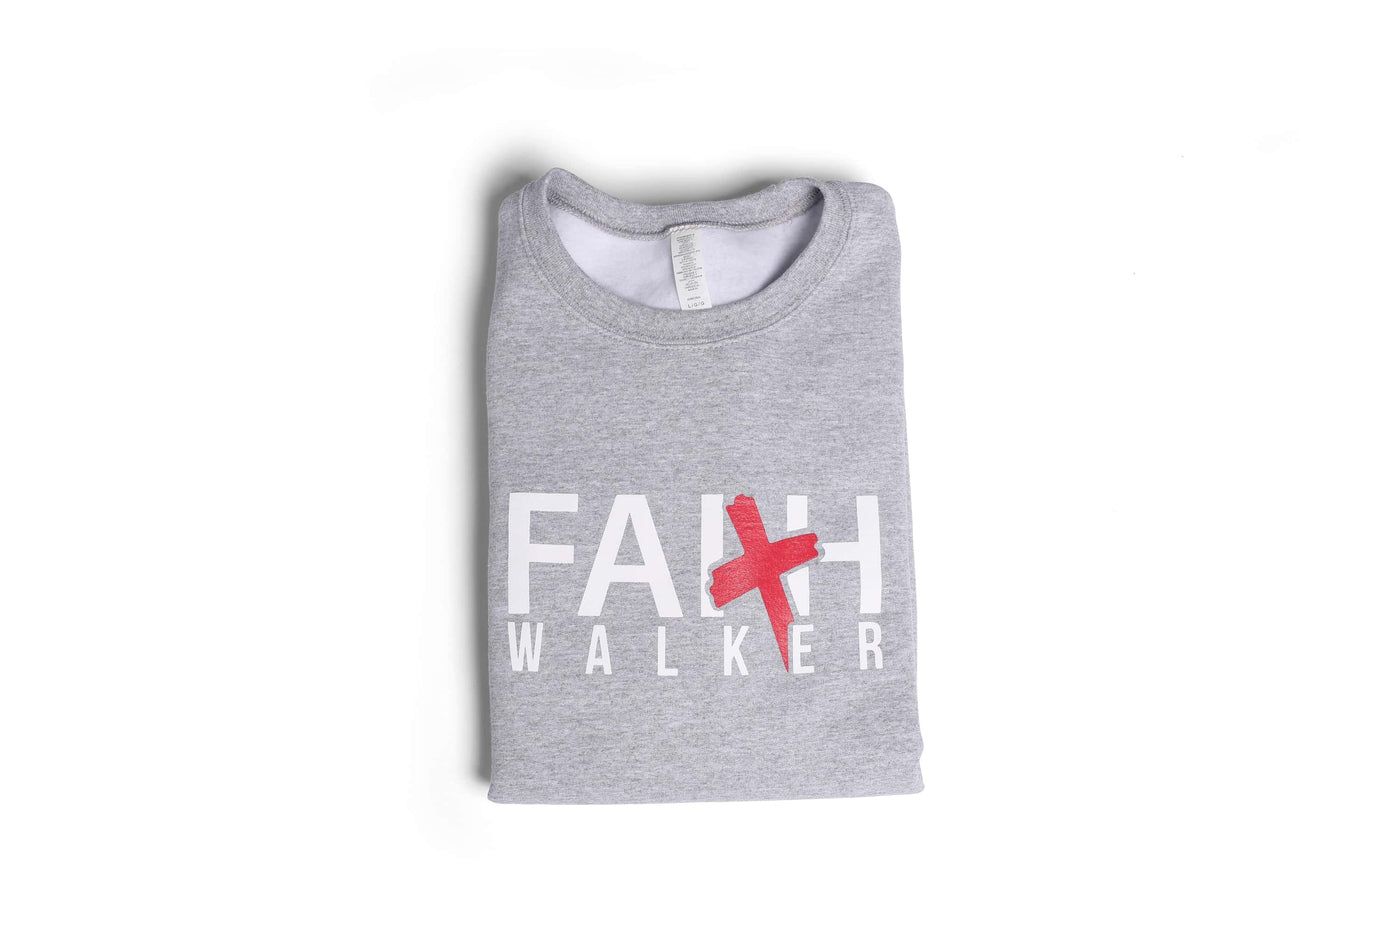 Faith Based Sweatshirts